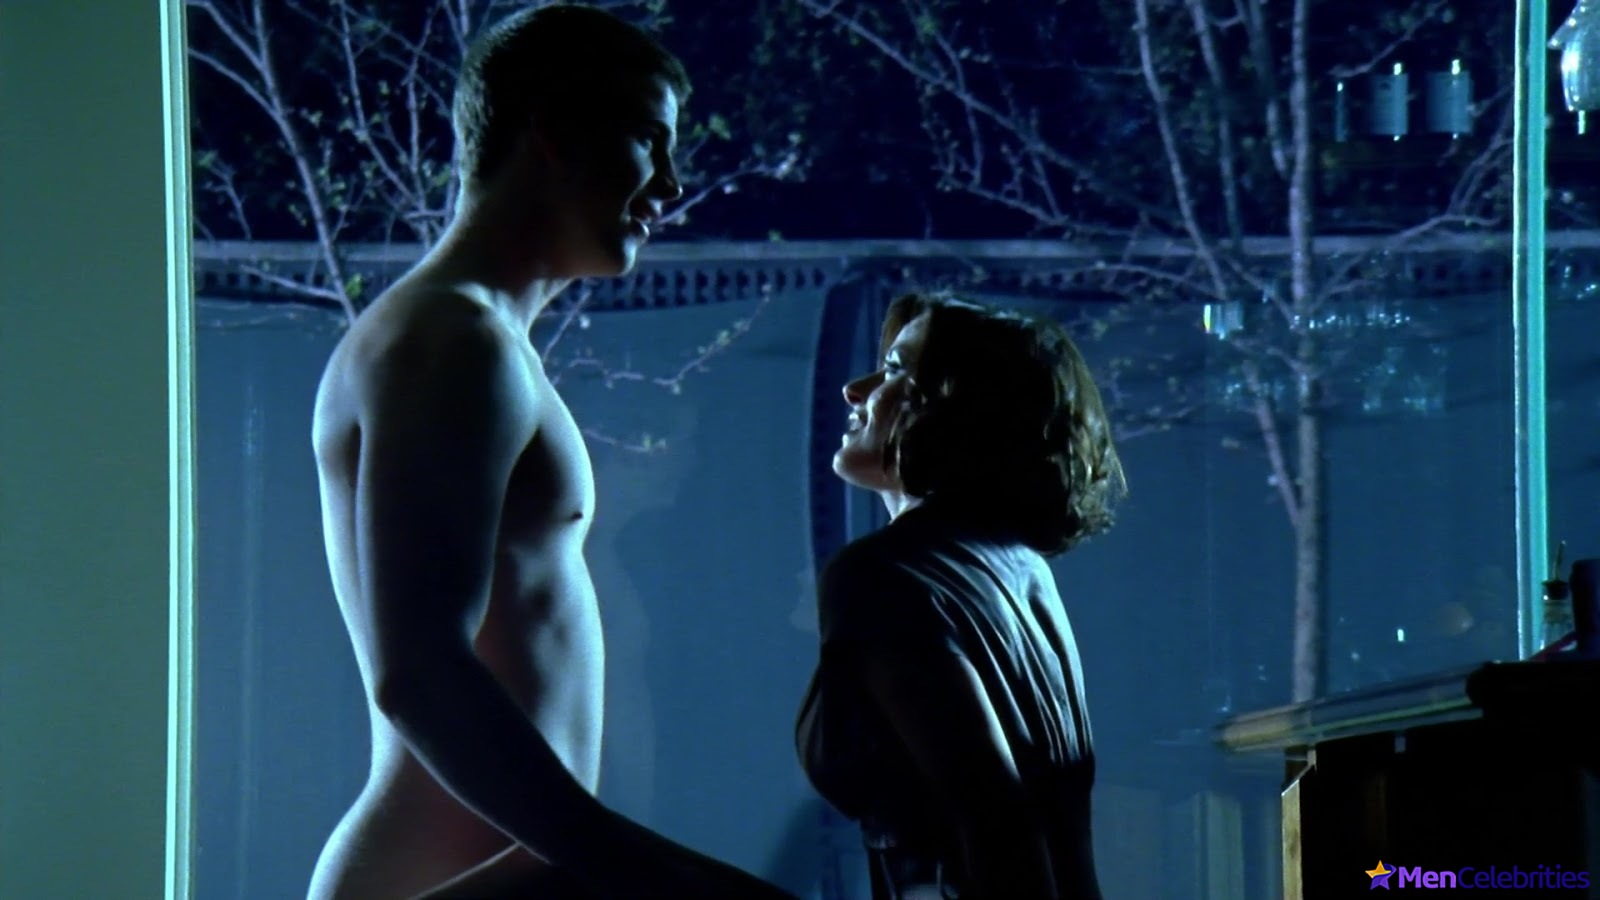 Liam Hemsworth Sex Porn - Liam Hemsworth Nude Sex & Underwear Movie Scenes - Men Celebrities